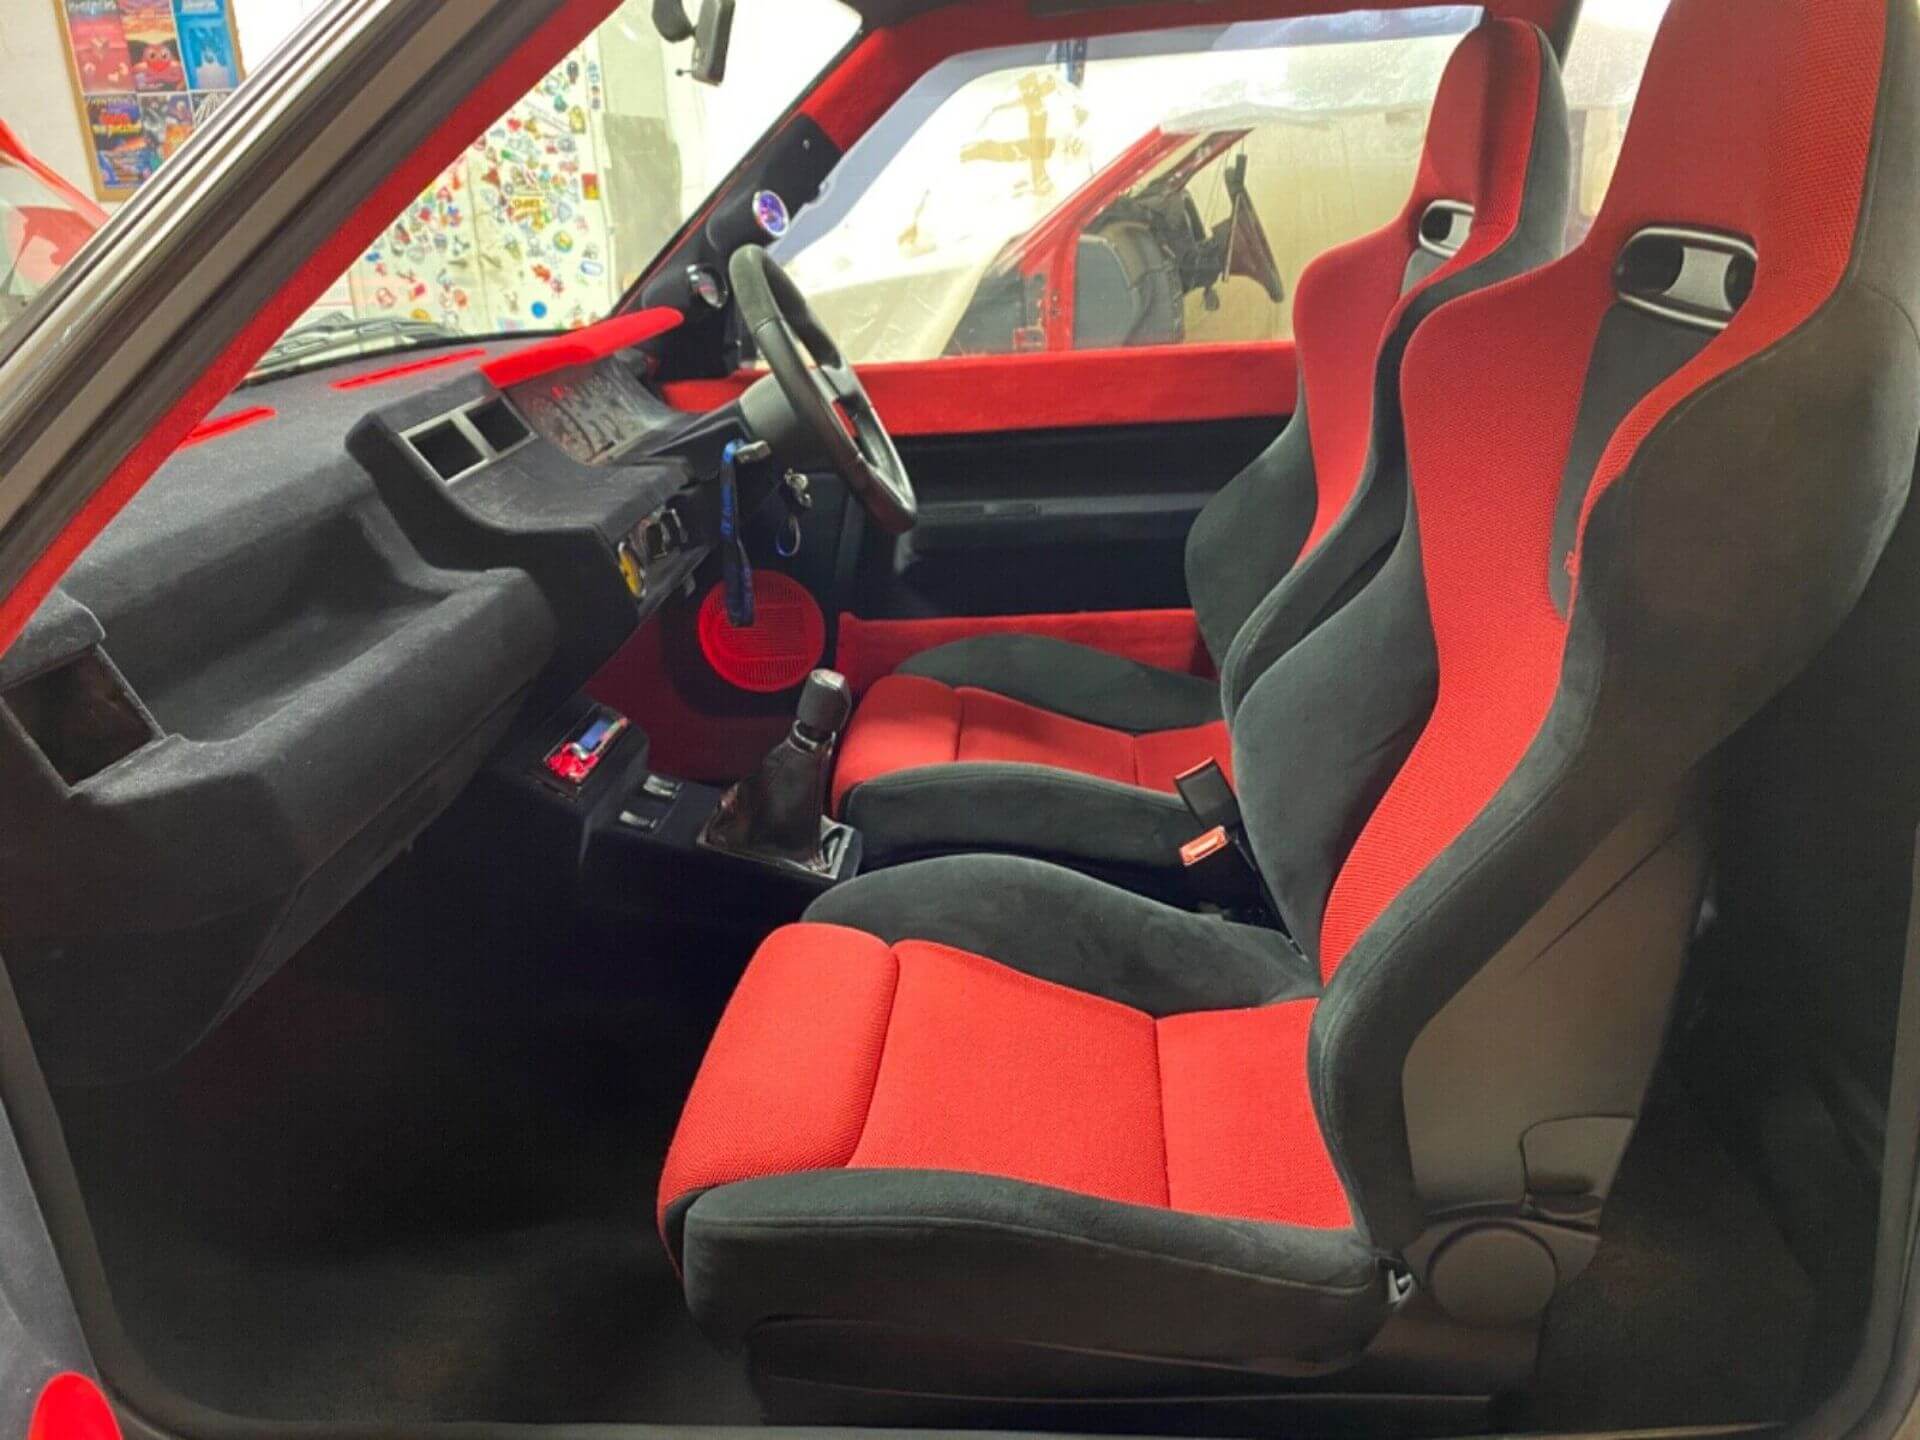 Renault 5 pick-up interior